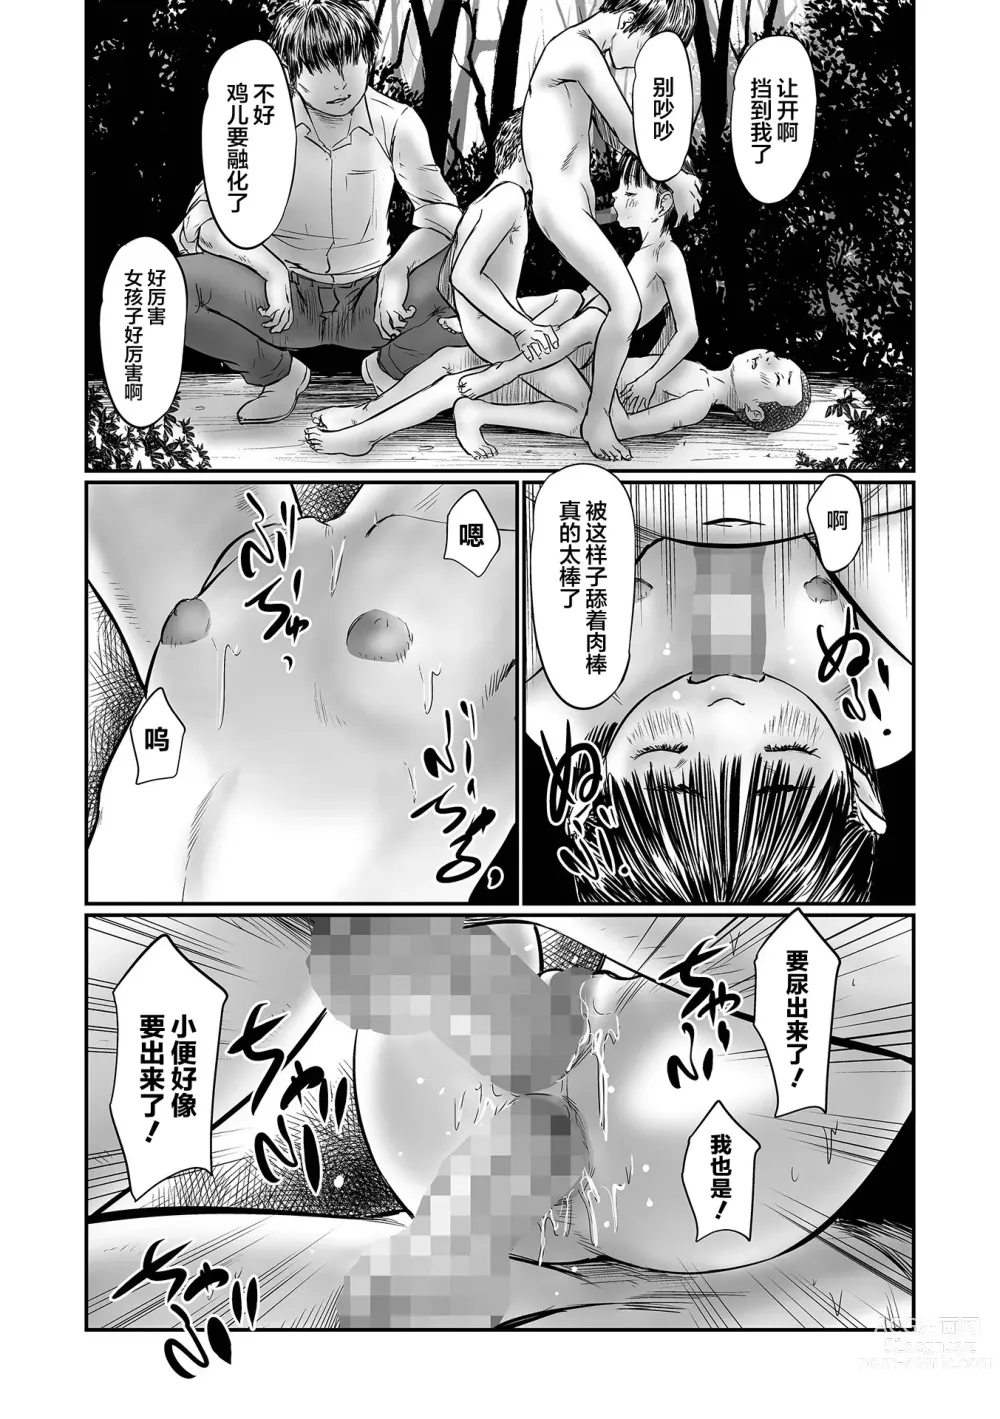 Page 18 of manga Kakure Goto